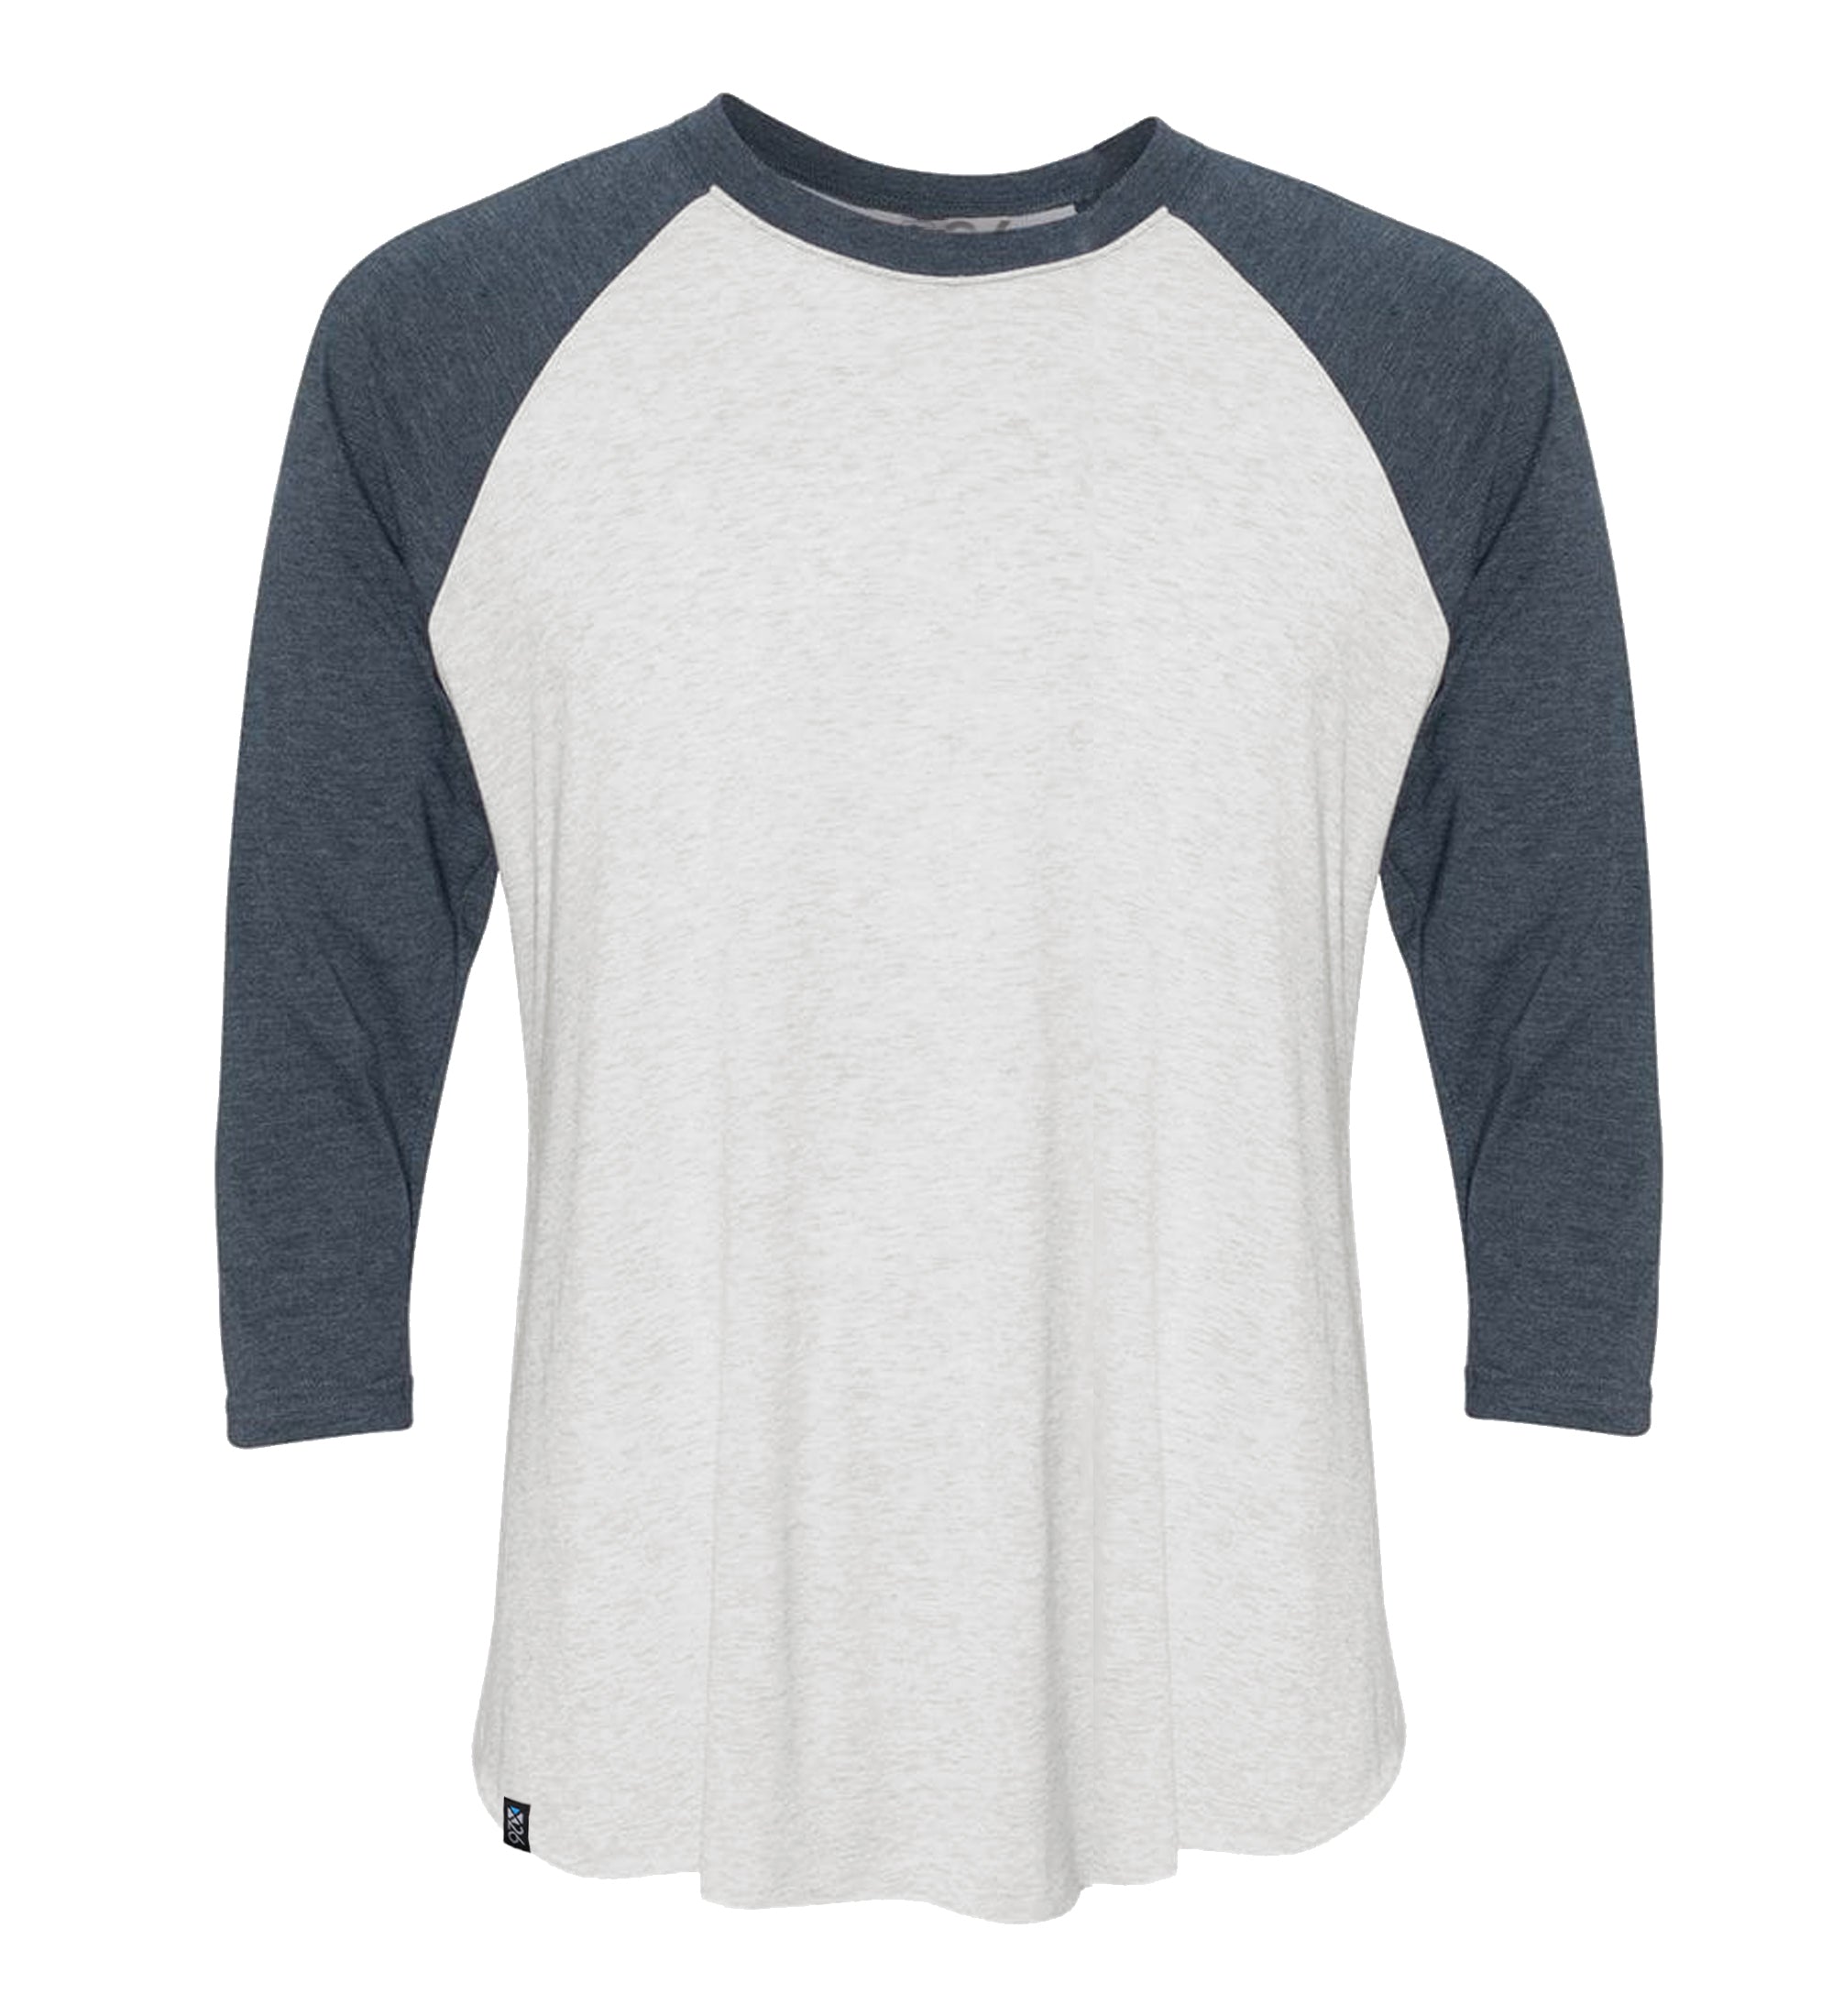 Tri-Blend Baseball Tee Raglan Shirt 3/4 Sleeve Shirts for Men